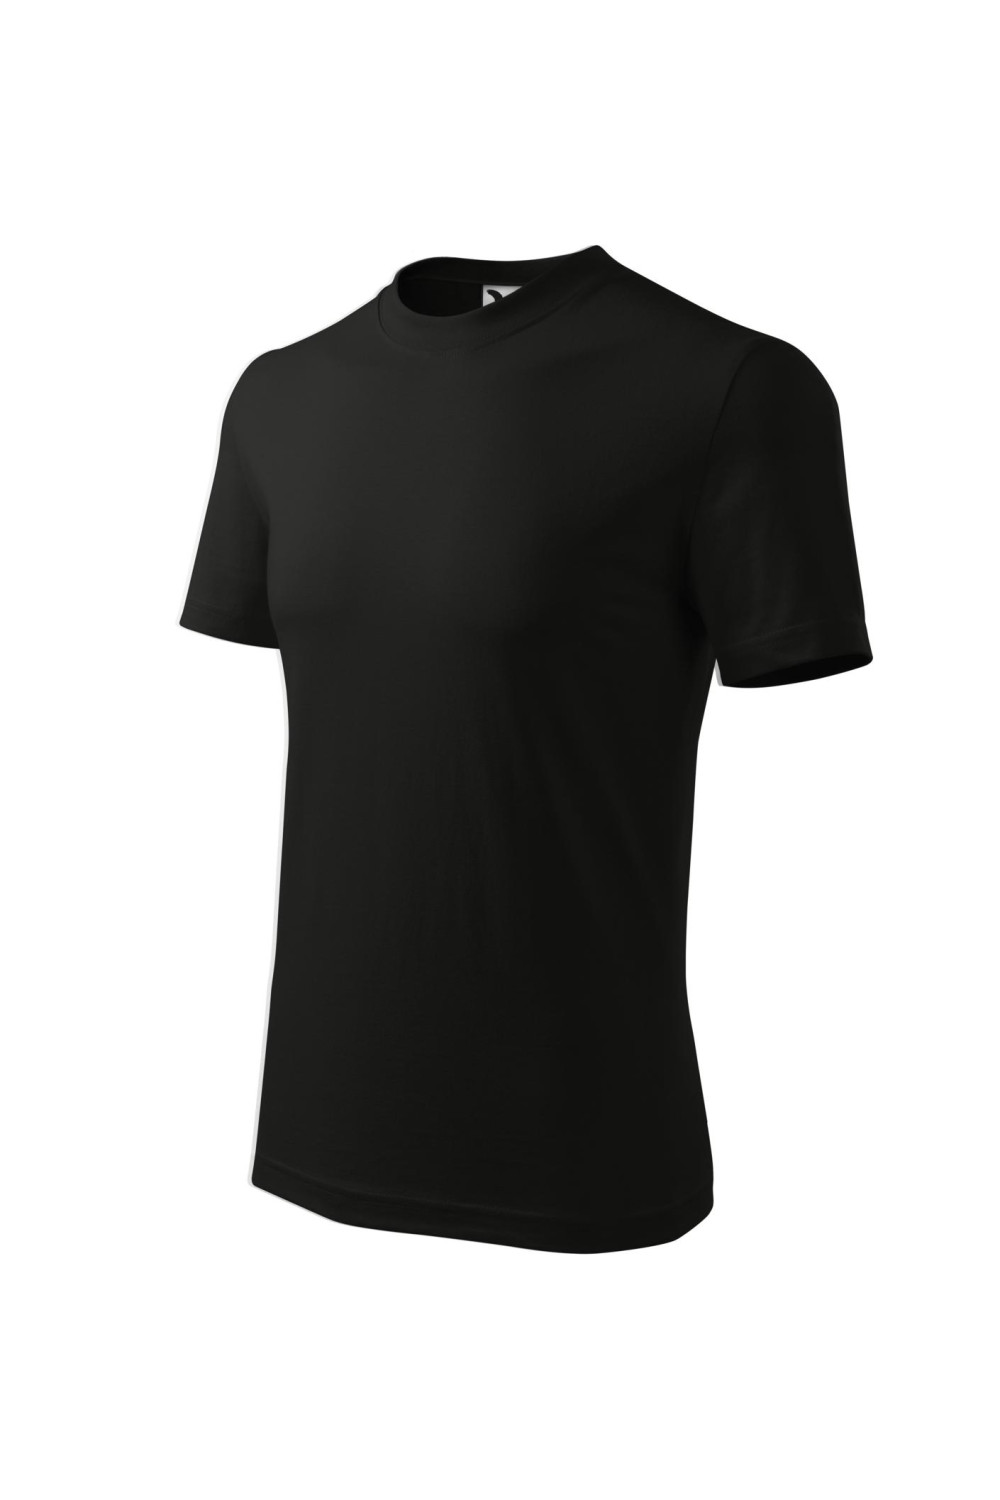 HEAVY 110 MALFINI ADLER Koszulka t-shirt unisex 100% bawełna czarny